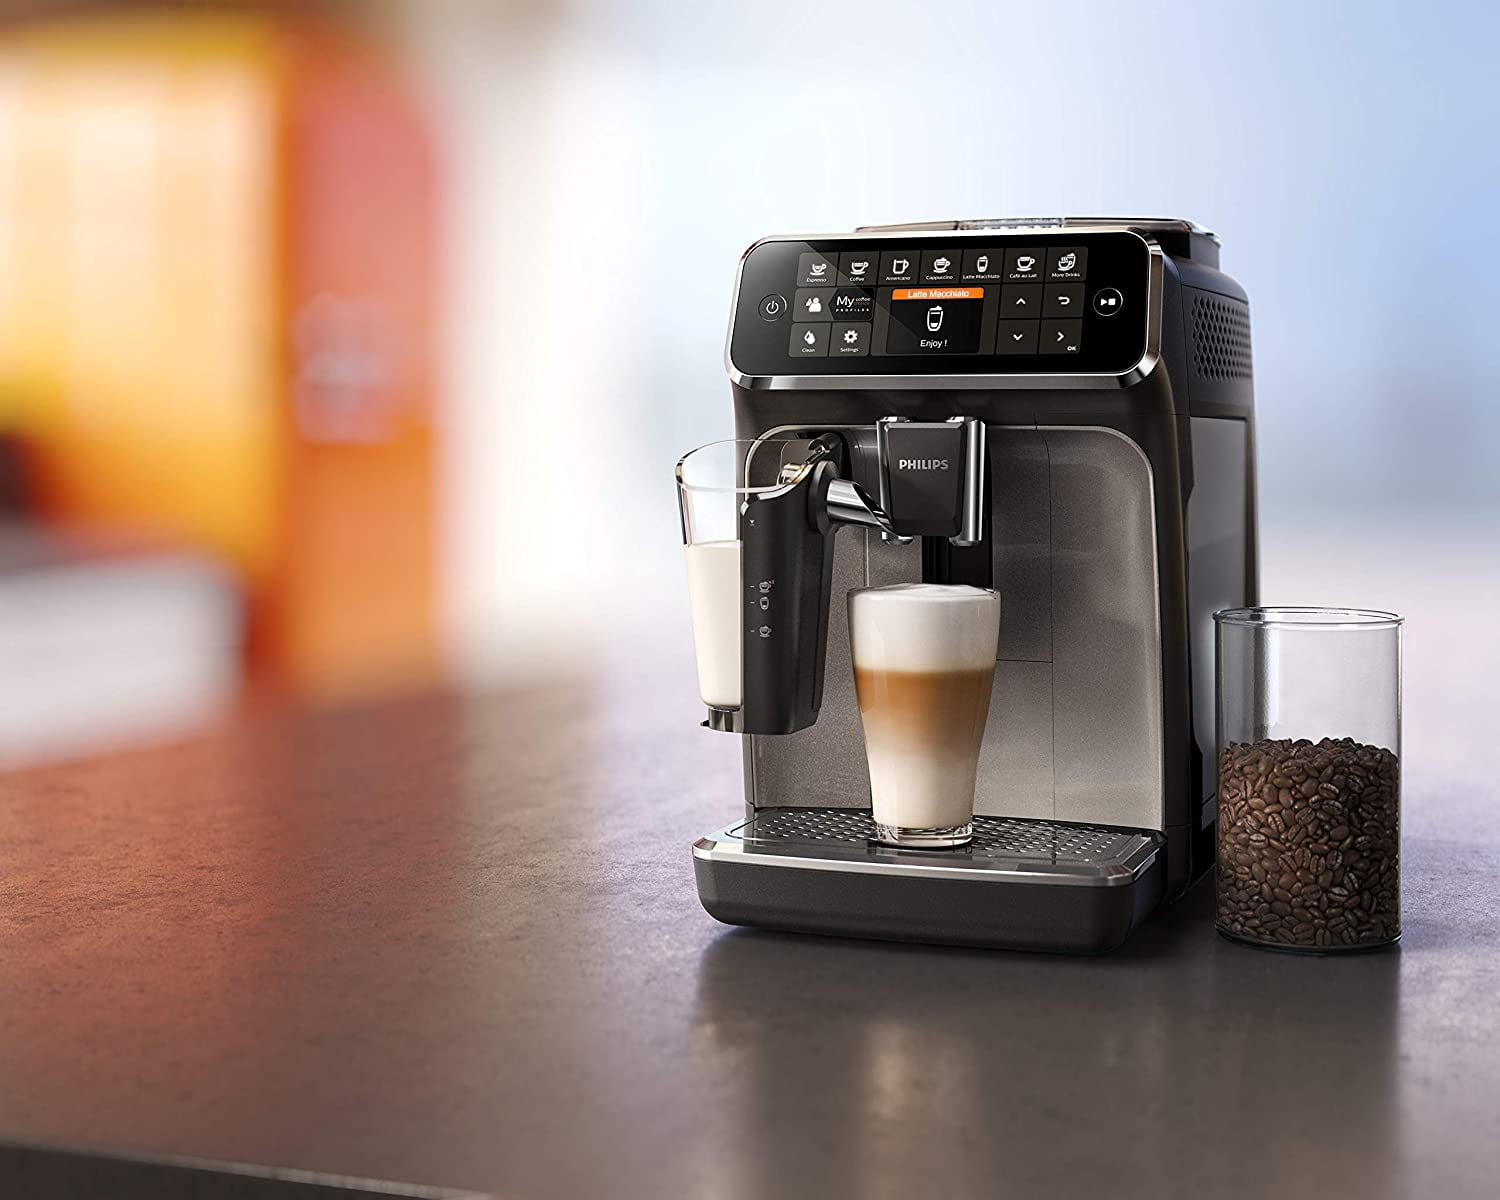 Philips 3200 LatteGo Superautomatic Espresso Machine - Stainless